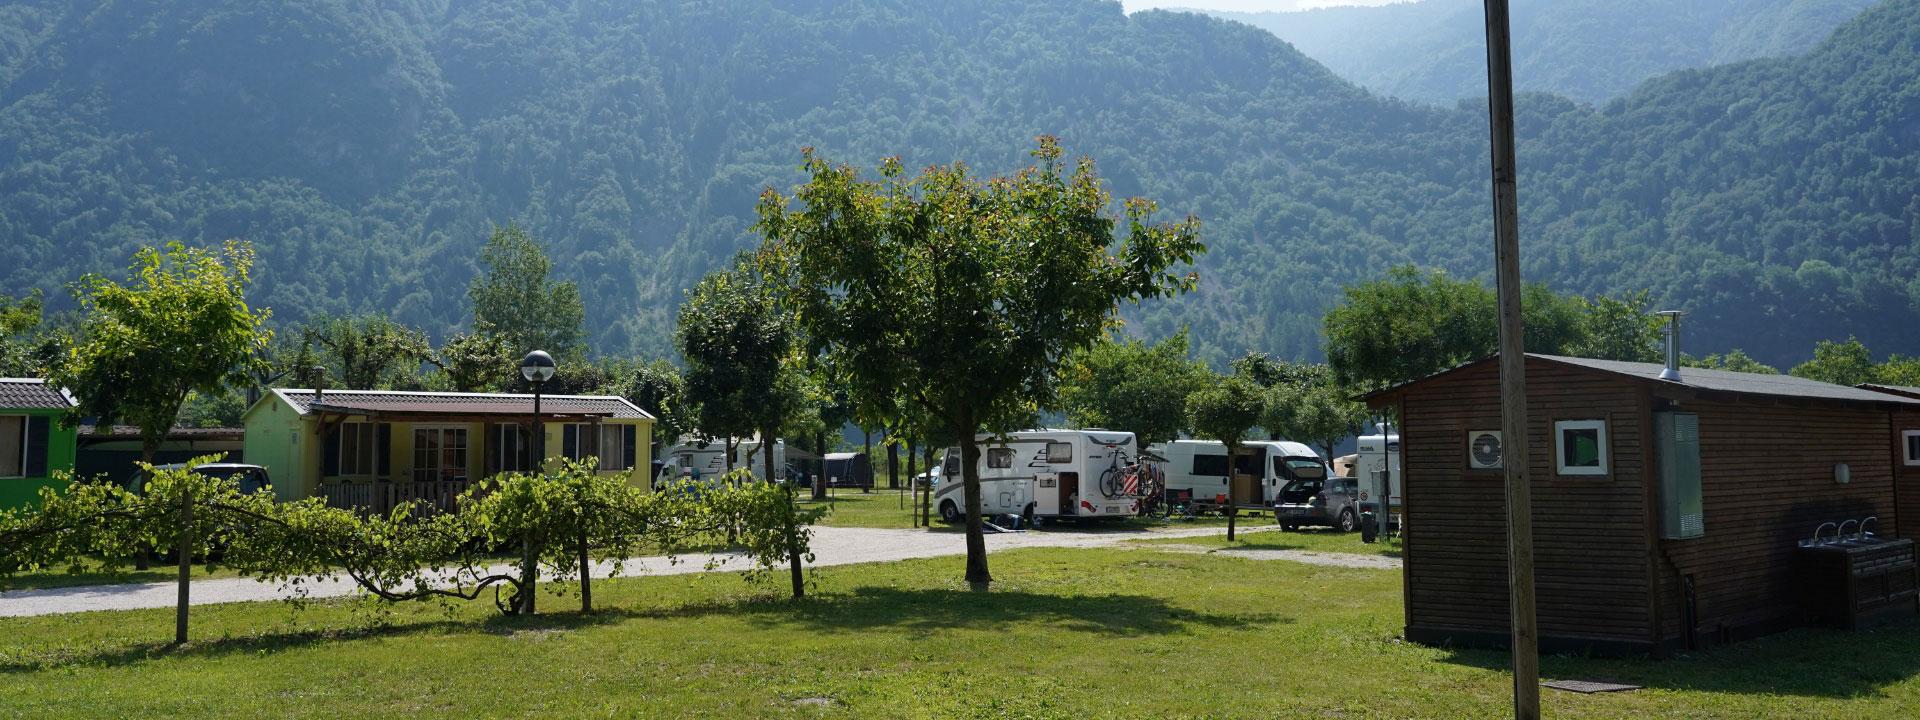 campinglago en september-offer-campsite-lake-corlo-belluno-dolomites 005